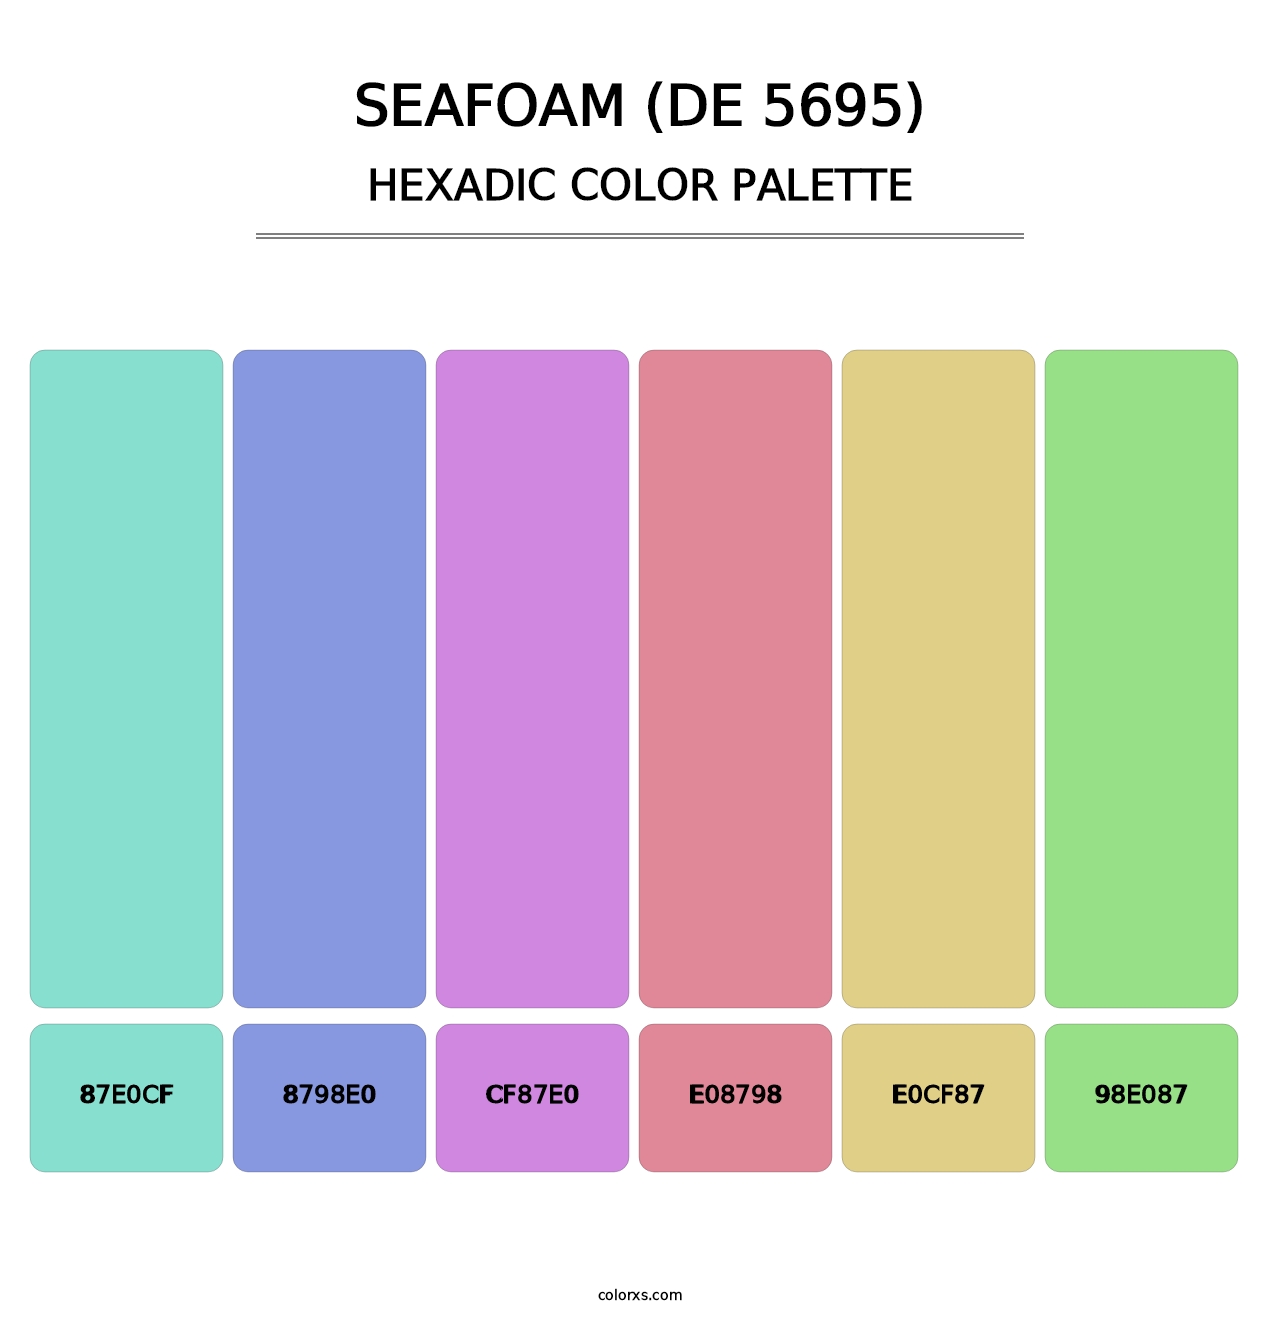 Seafoam (DE 5695) - Hexadic Color Palette